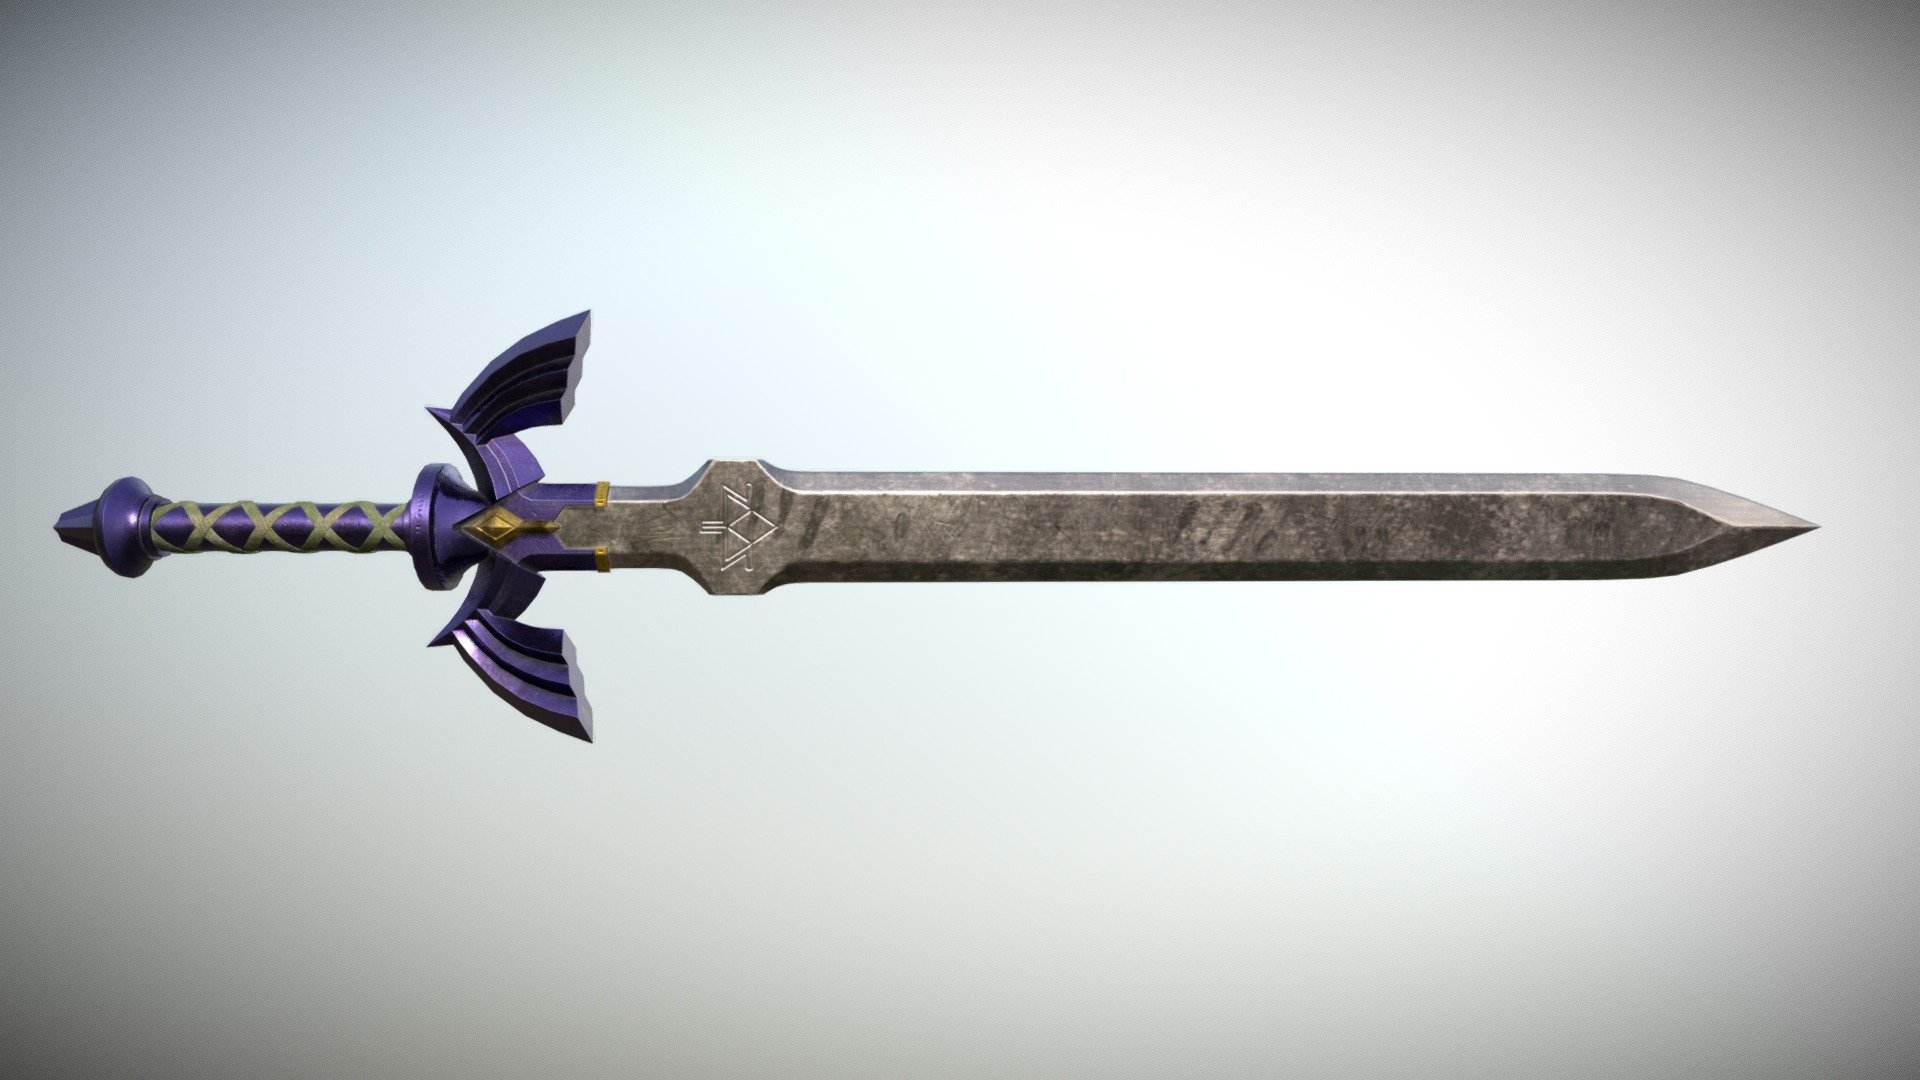 The sword that seals the darkness 

Model based of BOTW concept art

Modeled in Autodesk Maya and textured in Substance.

Artstation: https://www.artstation.com/awgebert - Master Sword - 3D model by AwGebert 3d model